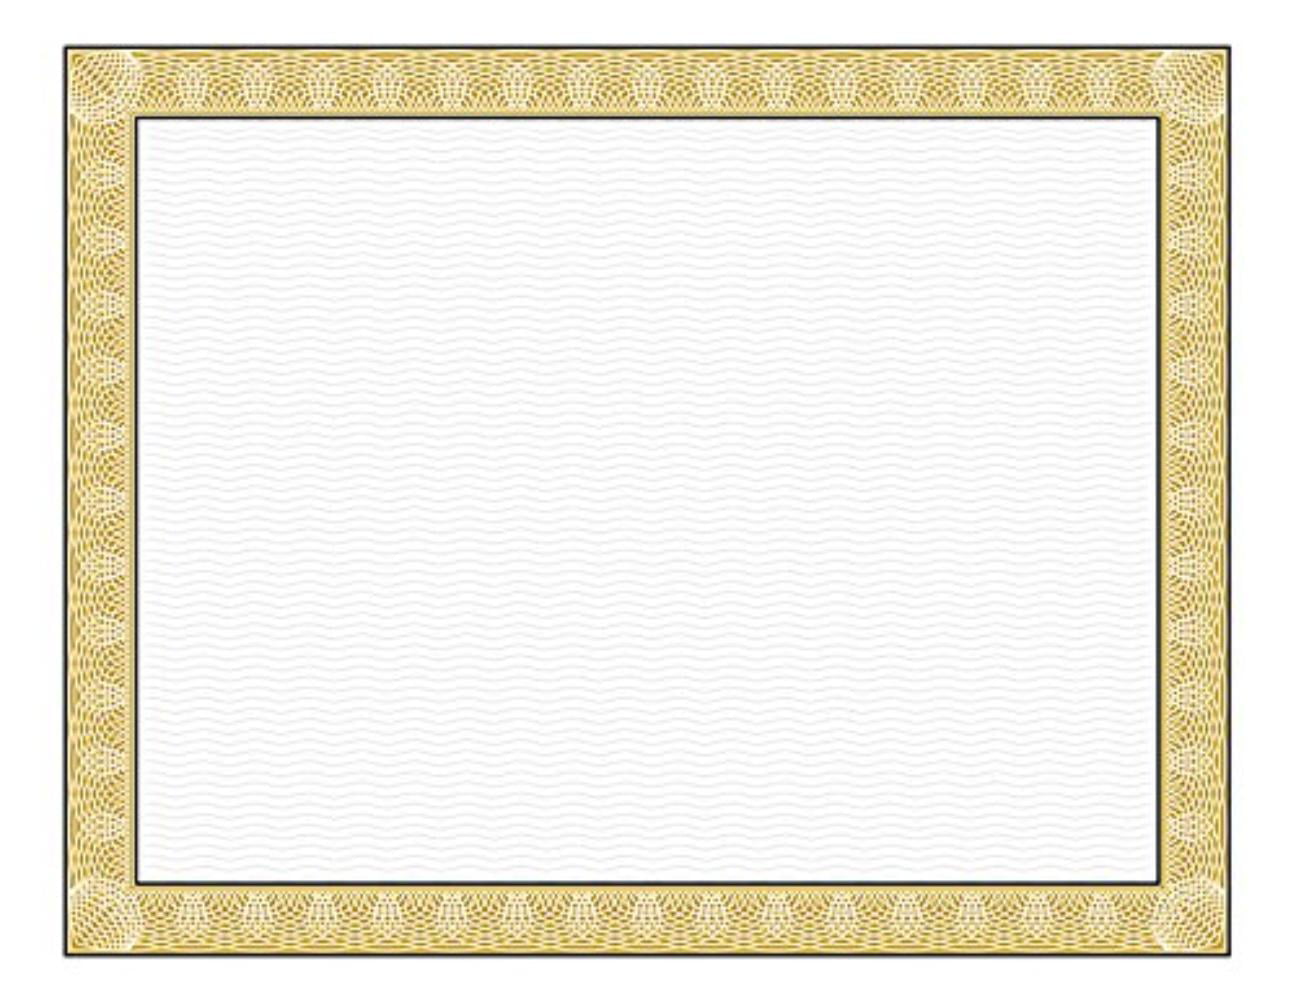 Parchment Paper Certificates 8 5 x 11 Inches Natural Diplomat Border